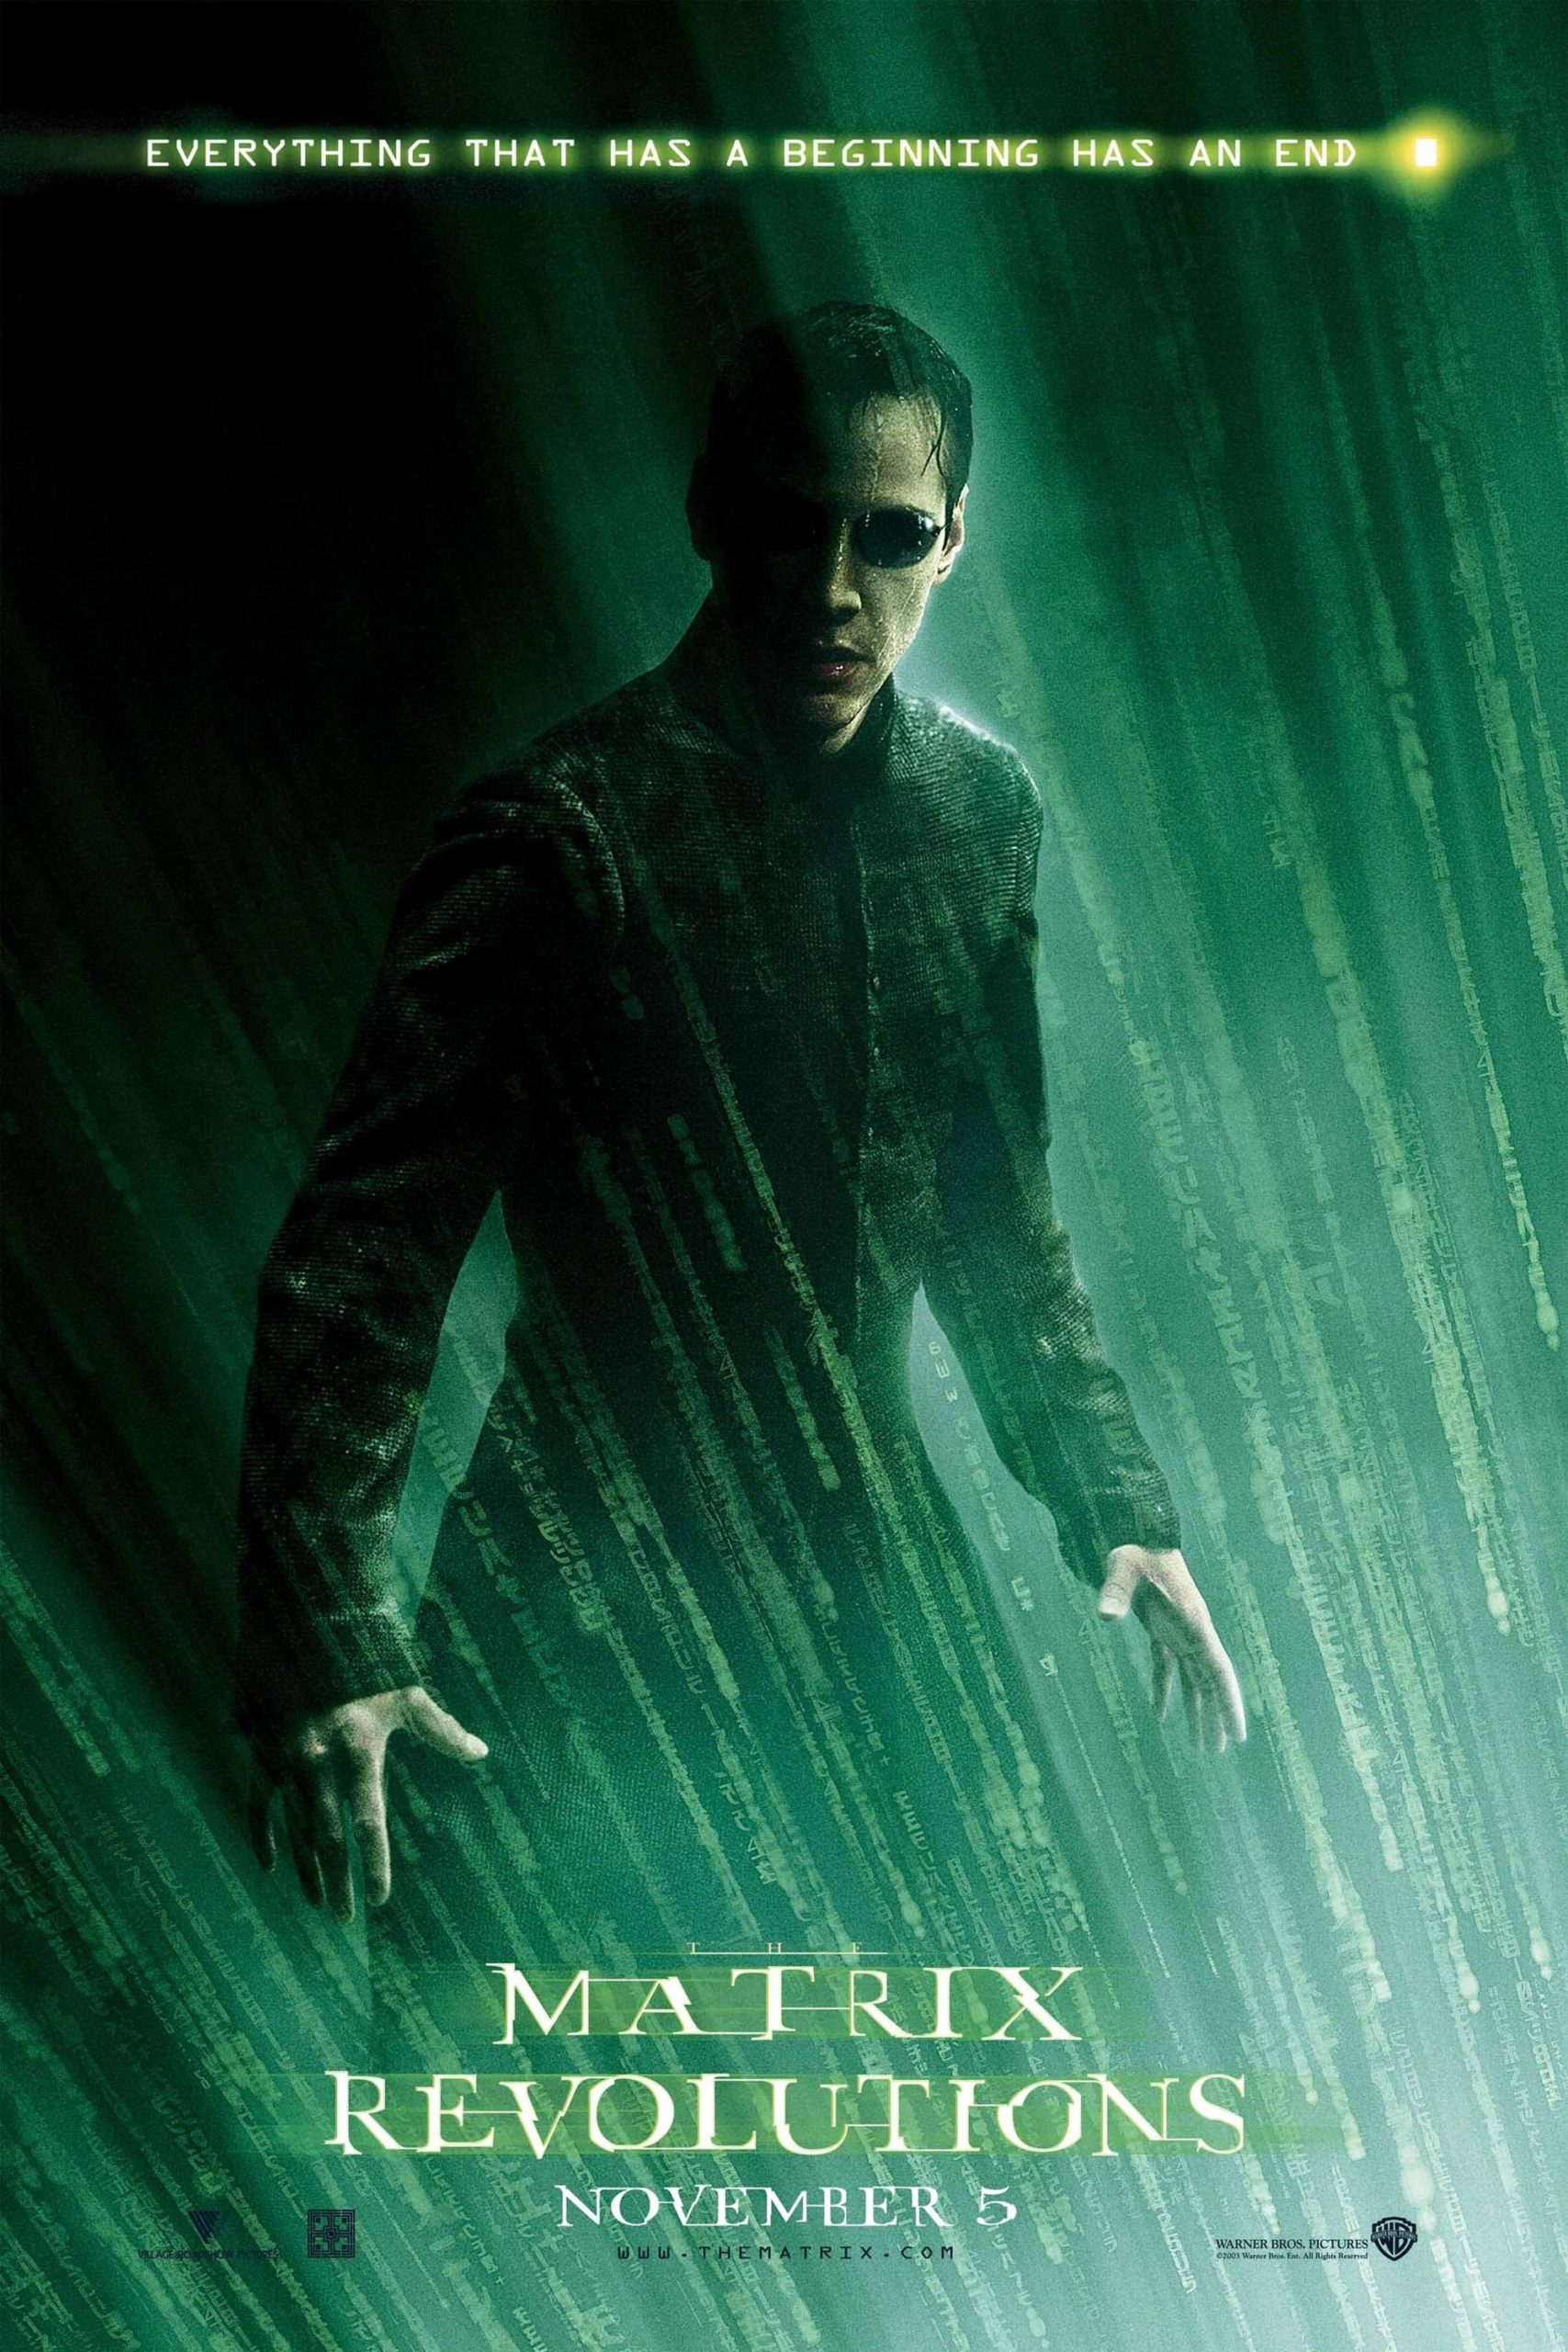 The Matrix Revolutions poster